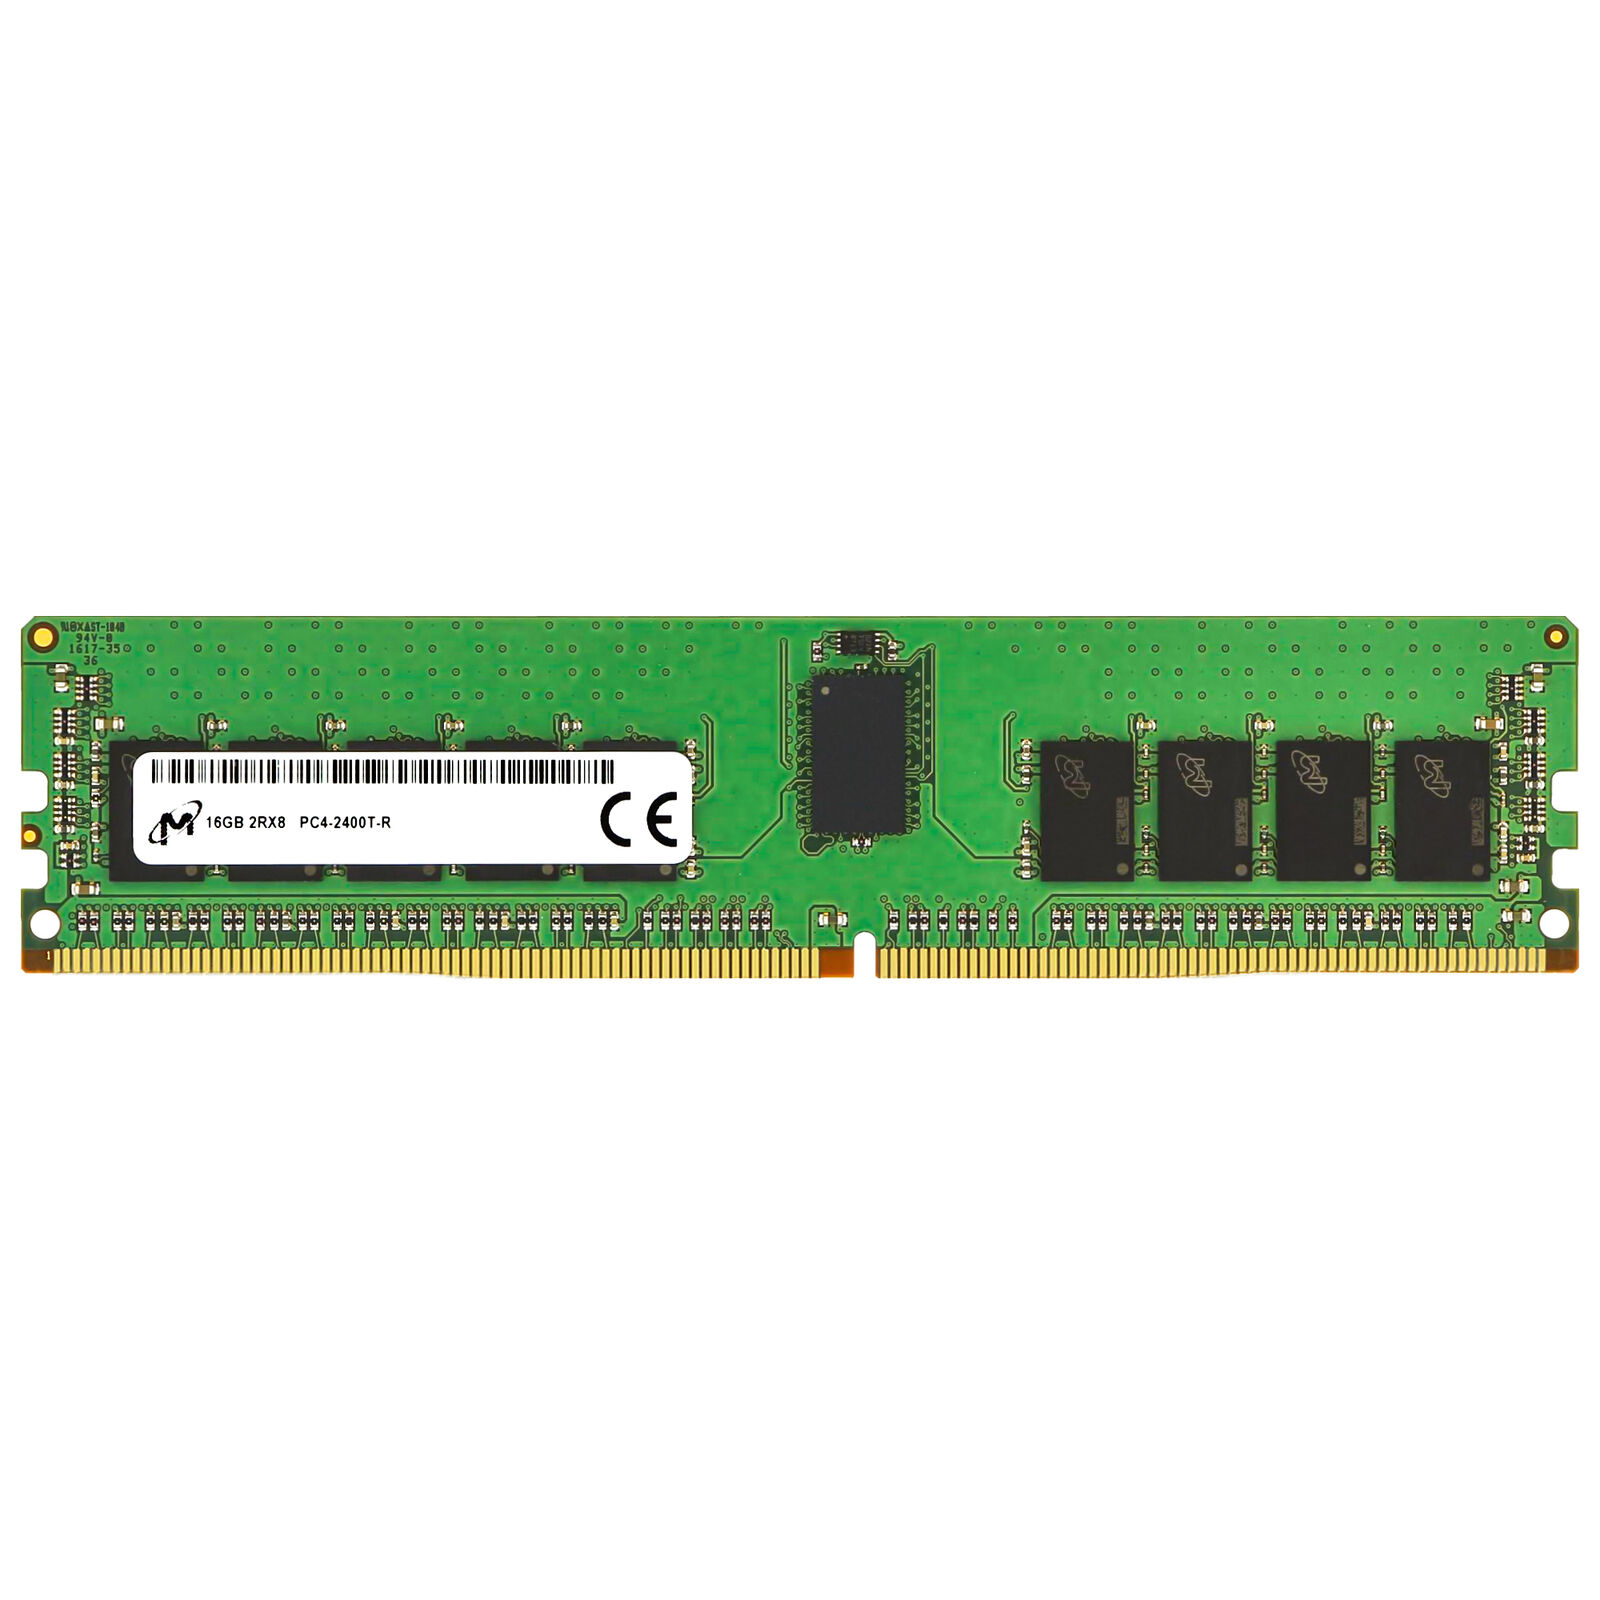 Micron 16GB 2Rx8 PC4-2400T RDIMM DDR4-19200 ECC REG Registered Server Memory RAM